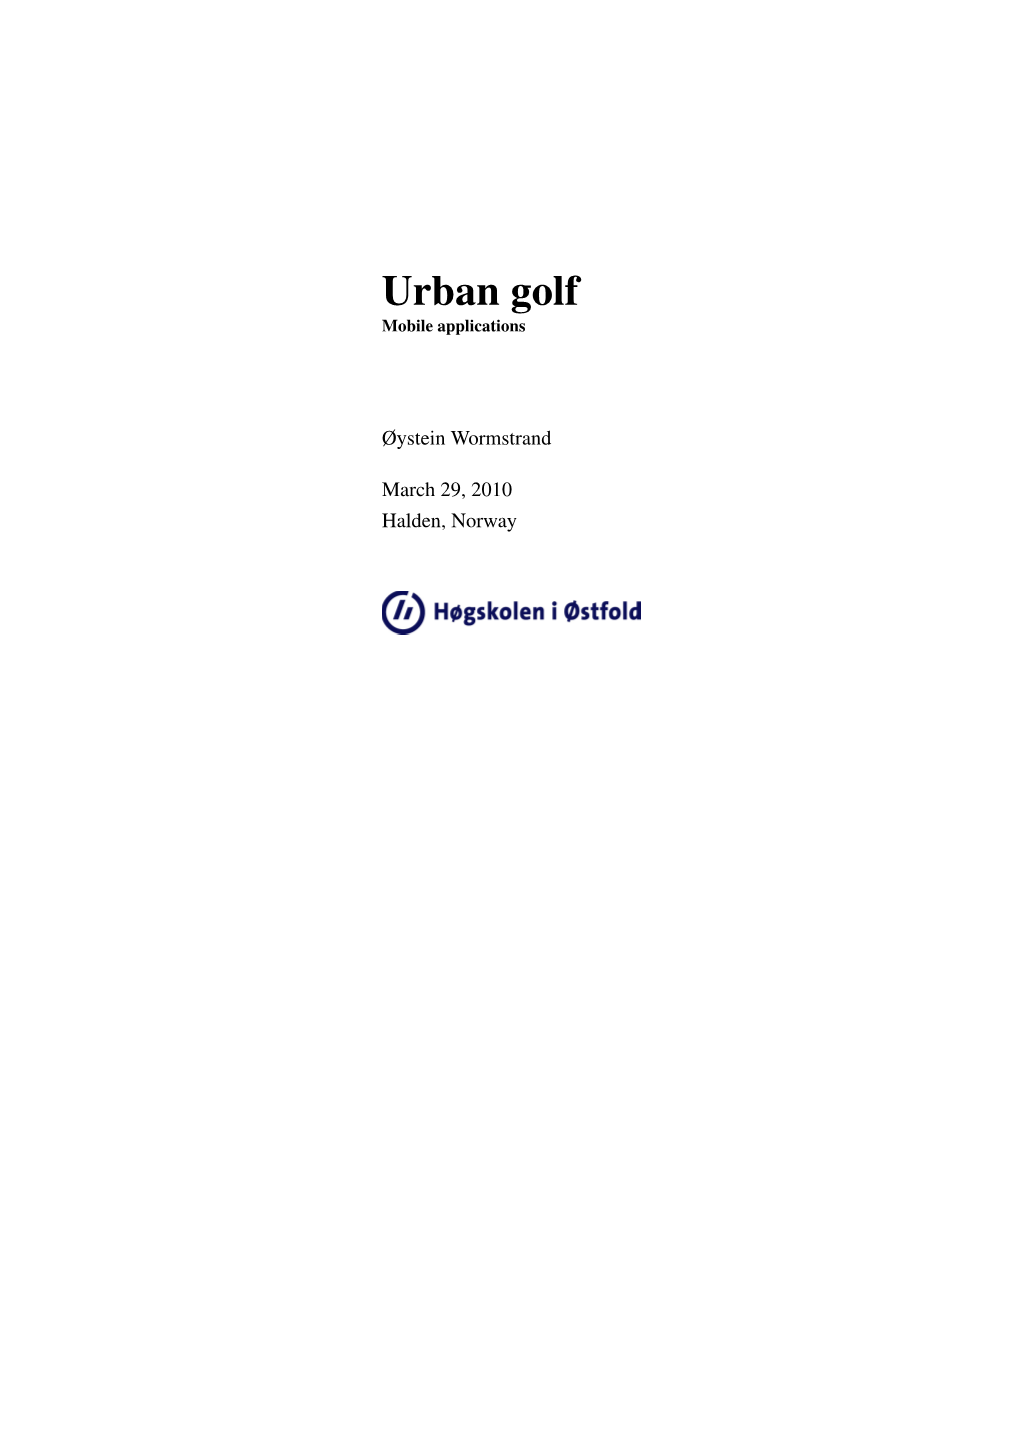 Urban Golf Mobile Applications